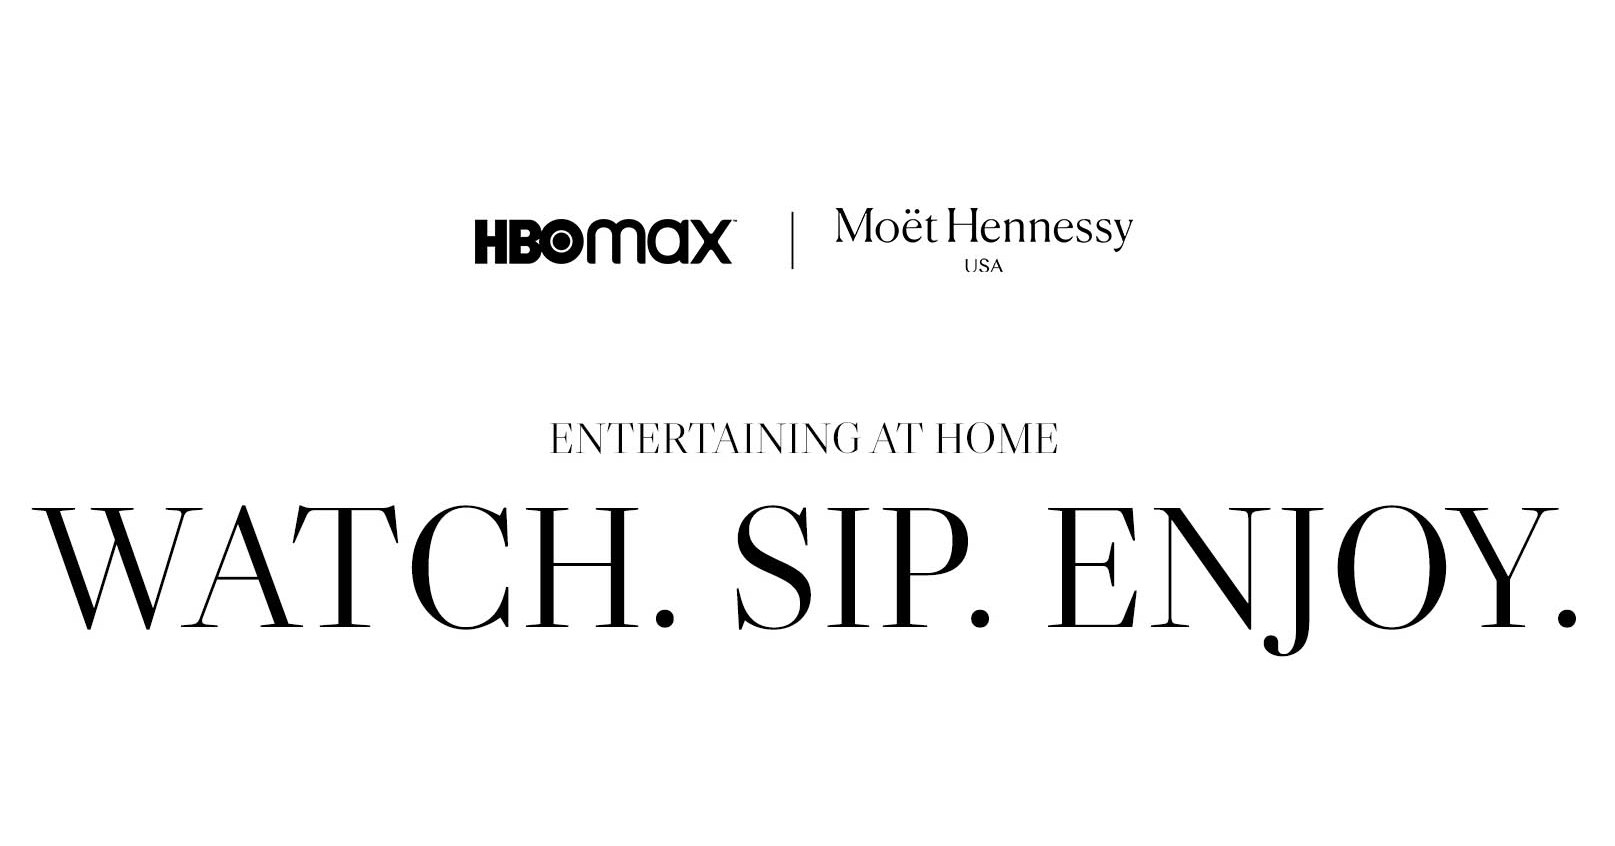 HBO Max, Moët Hennessy Ink Multibrand Partnership